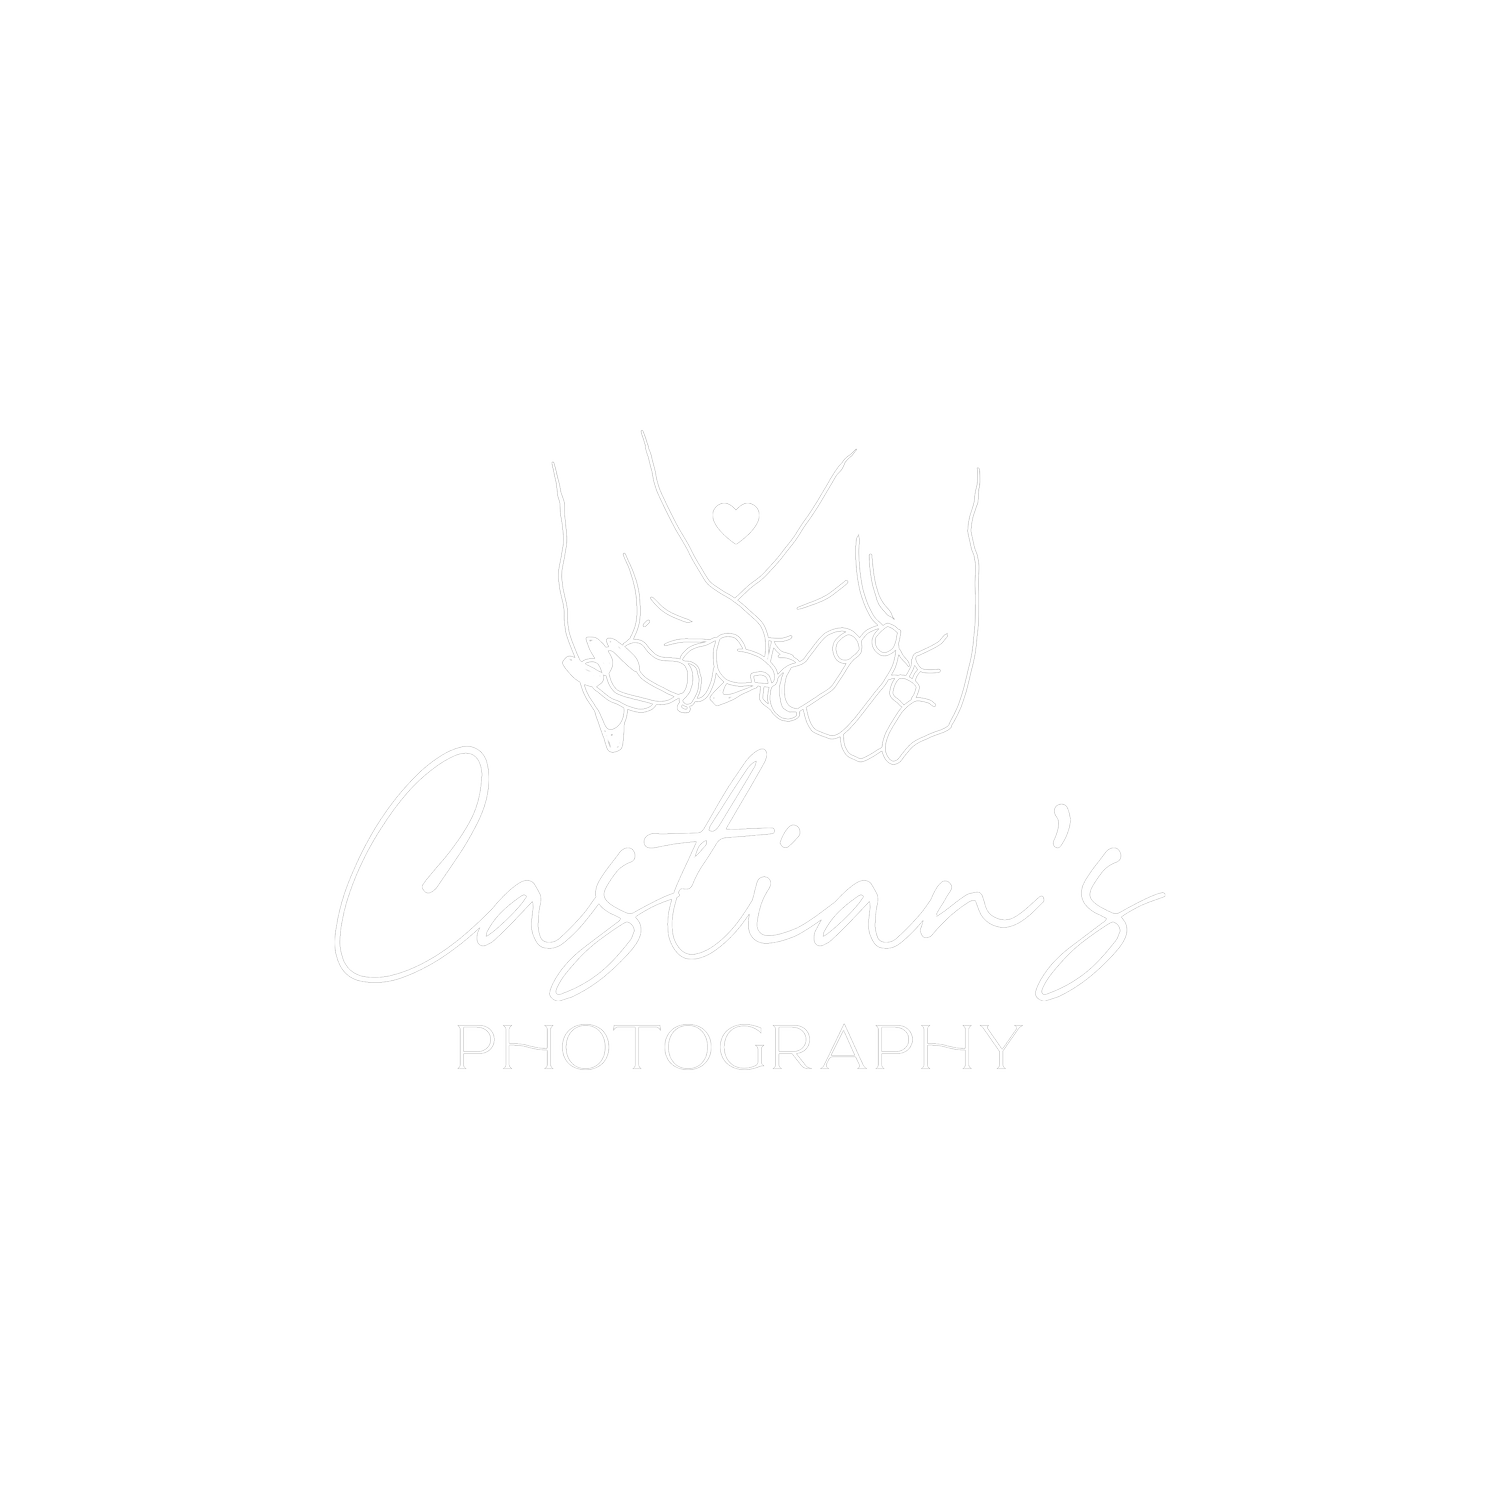 Castians Photography